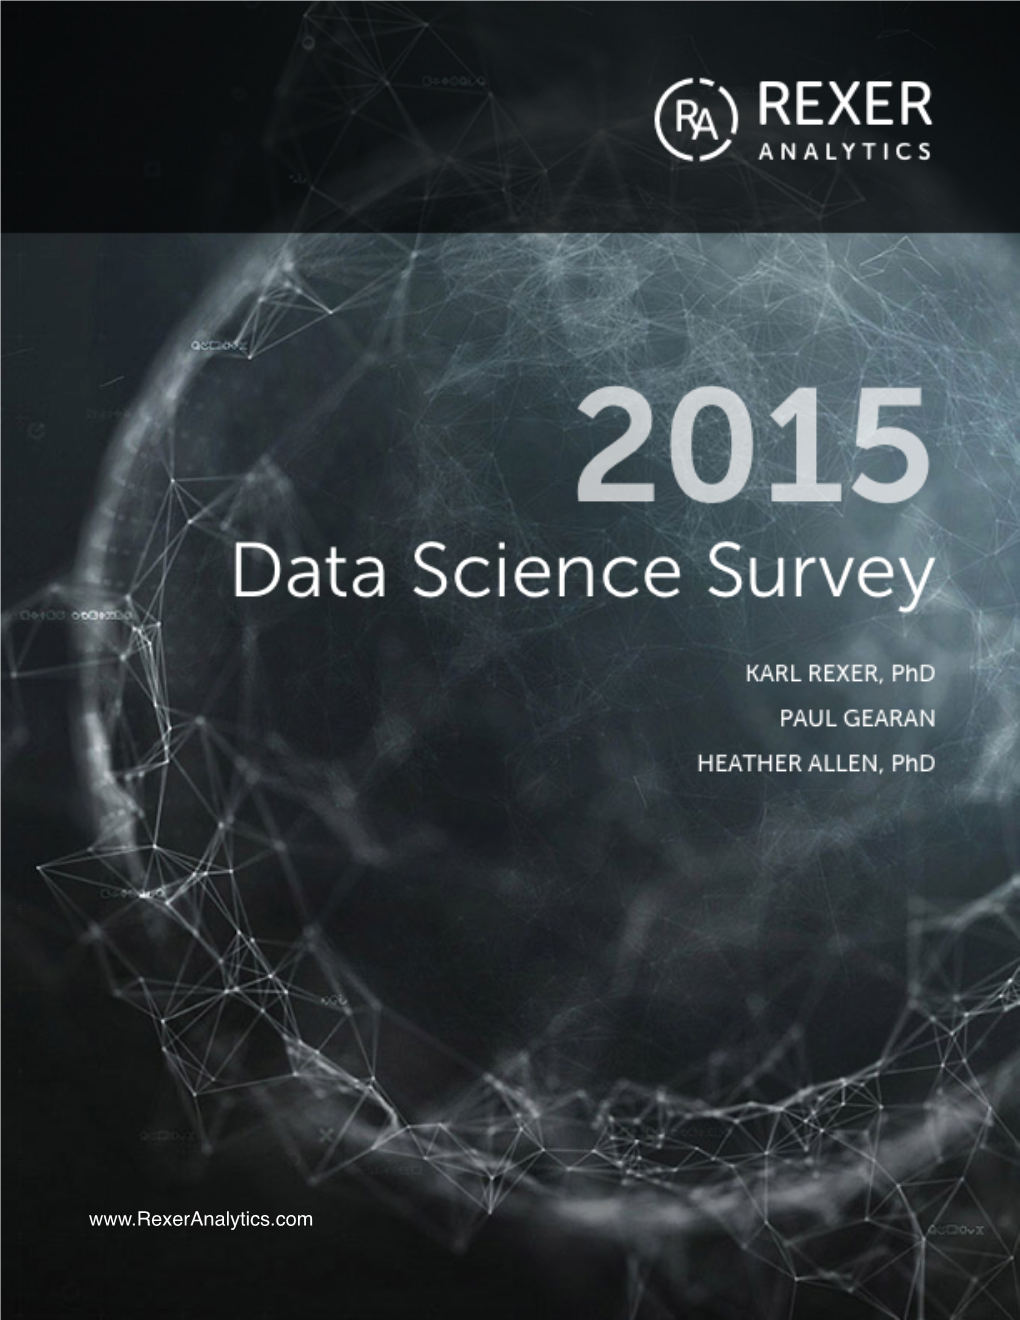 Rexer Analytics' 2015 Data Science Survey